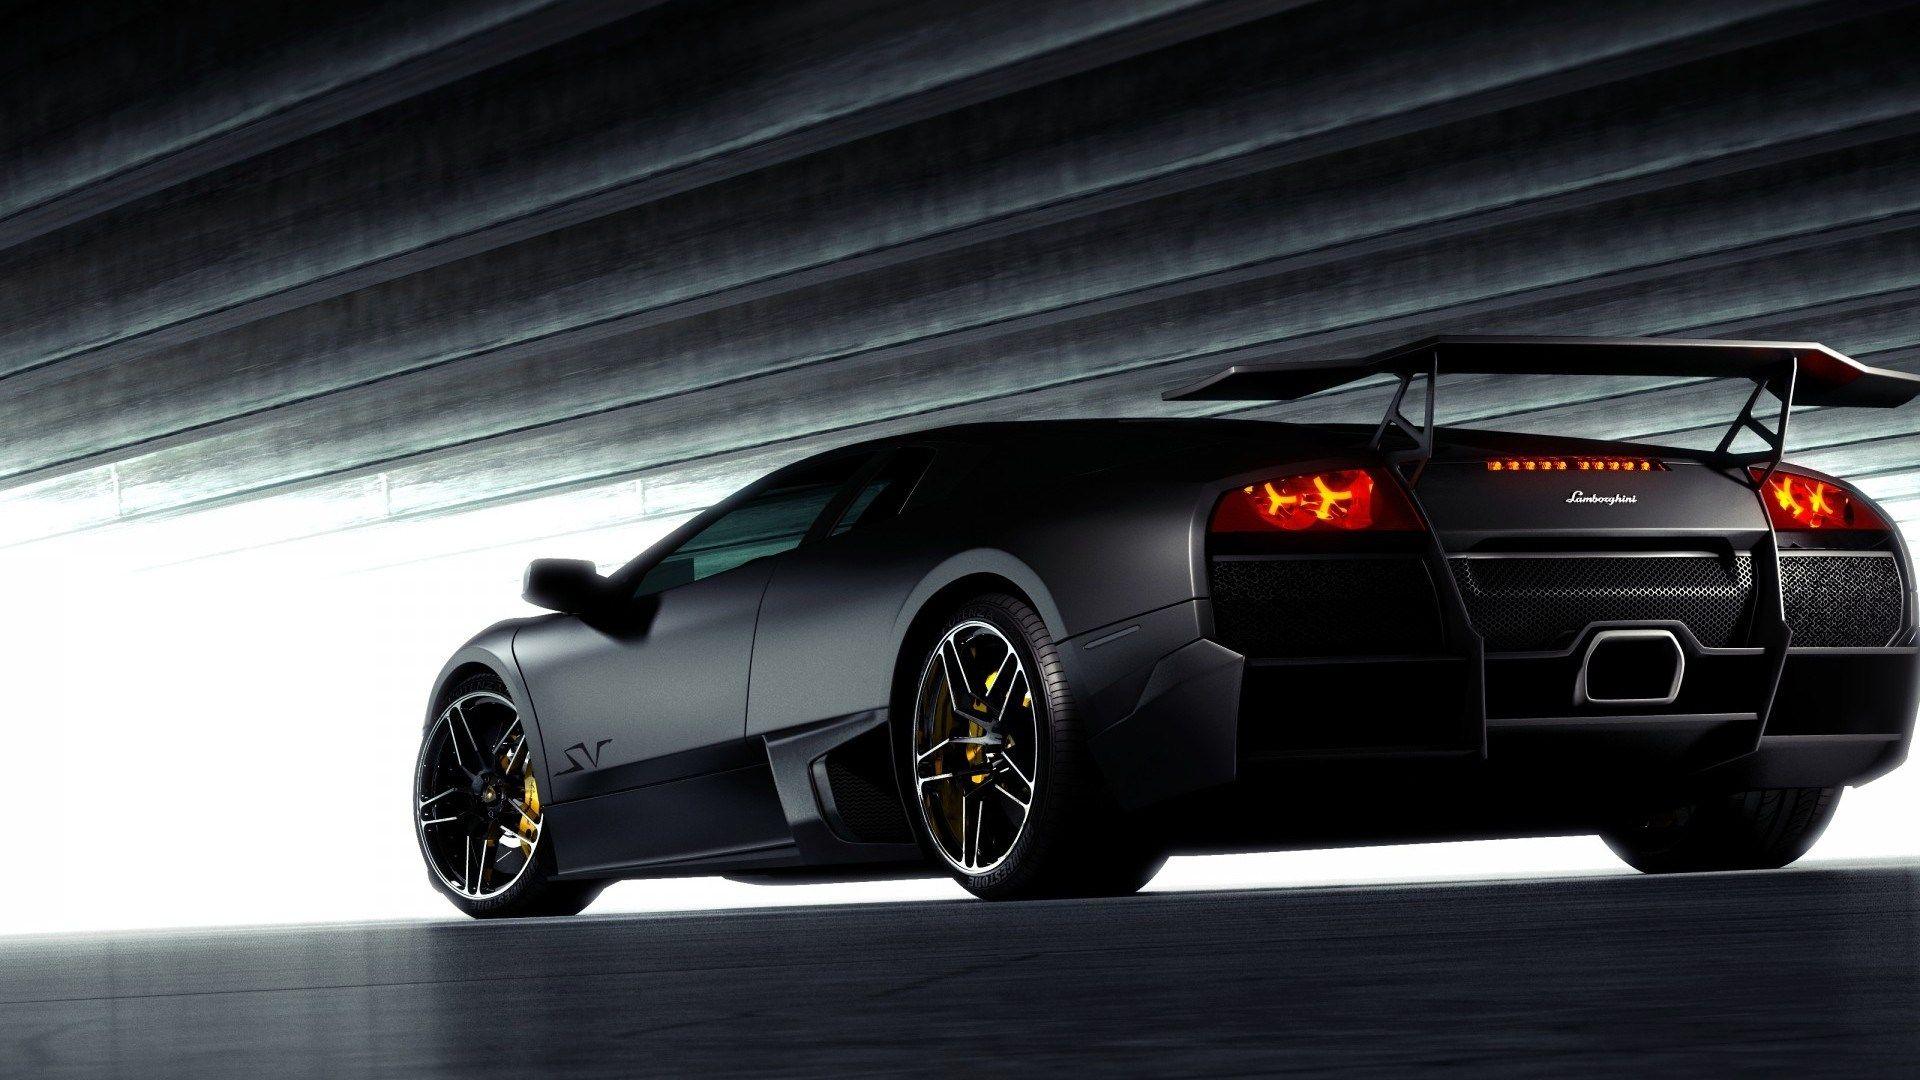 Black Lamborghini Back View Hd Wallpaper 1080p Cars